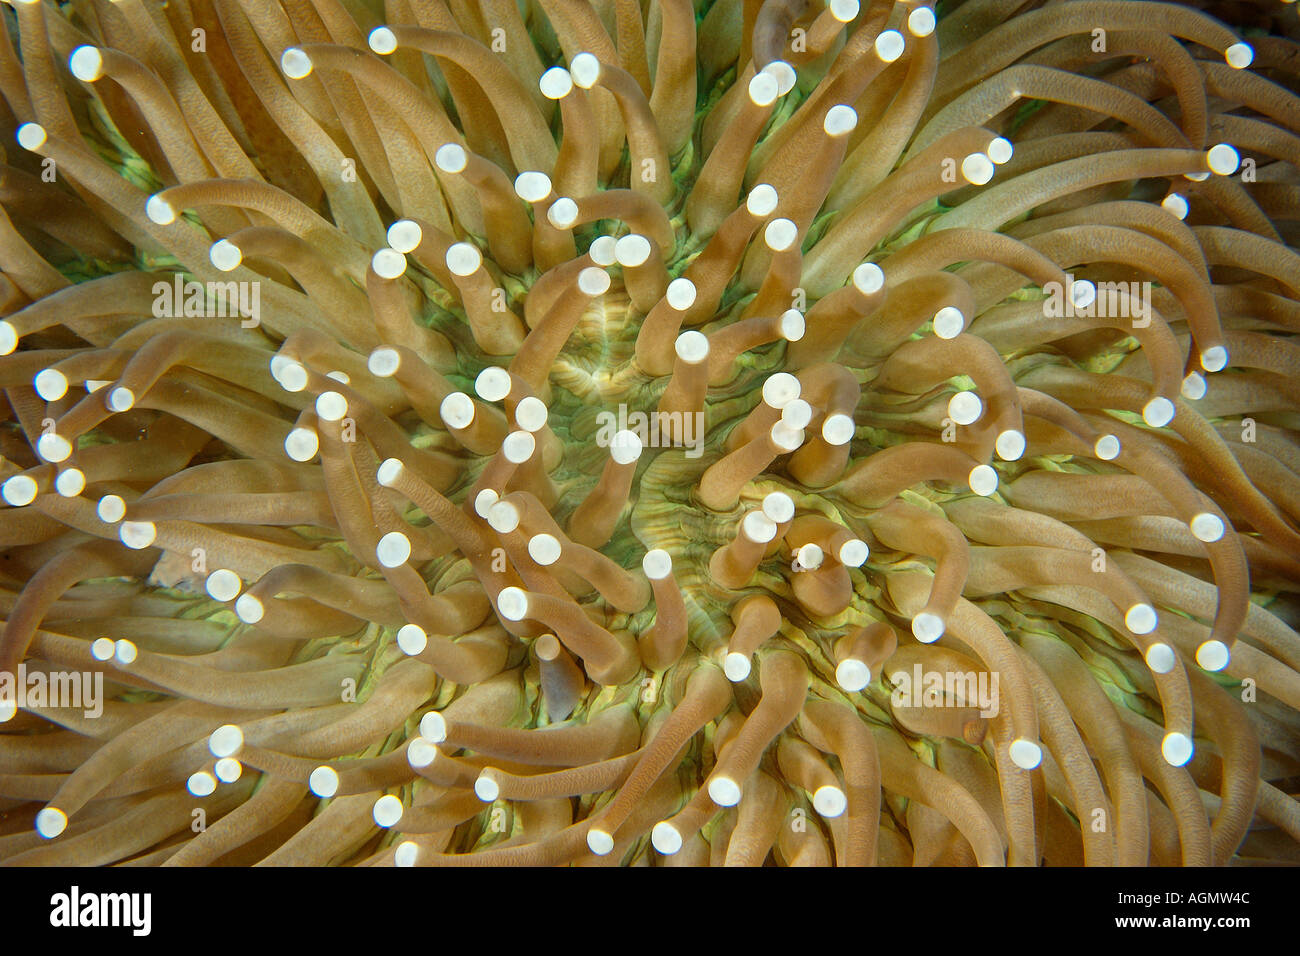 Magnifica anemone marittimo Heteractis magnifica parete Sinandigan Puerto Galera Mindoro Filippine Foto Stock